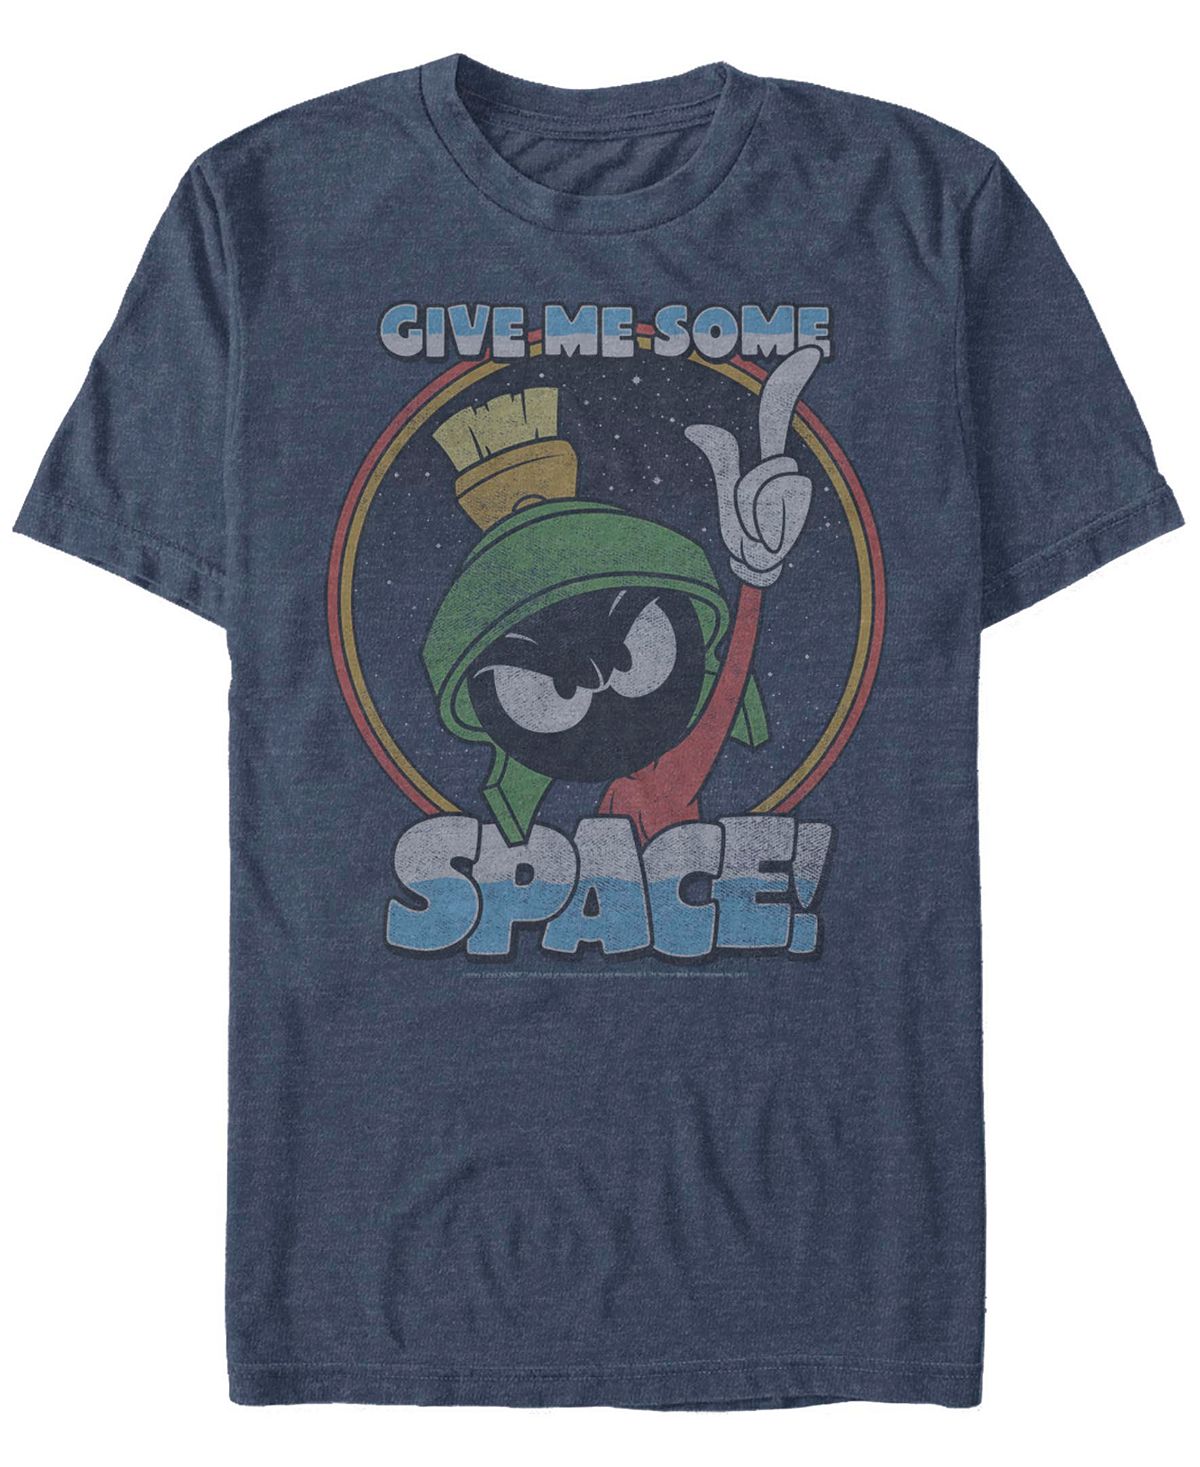 Мужская футболка с коротким рукавом looney tunes need more space Fifth Sun, мульти printio лонгслив марвин марсианин багз банни